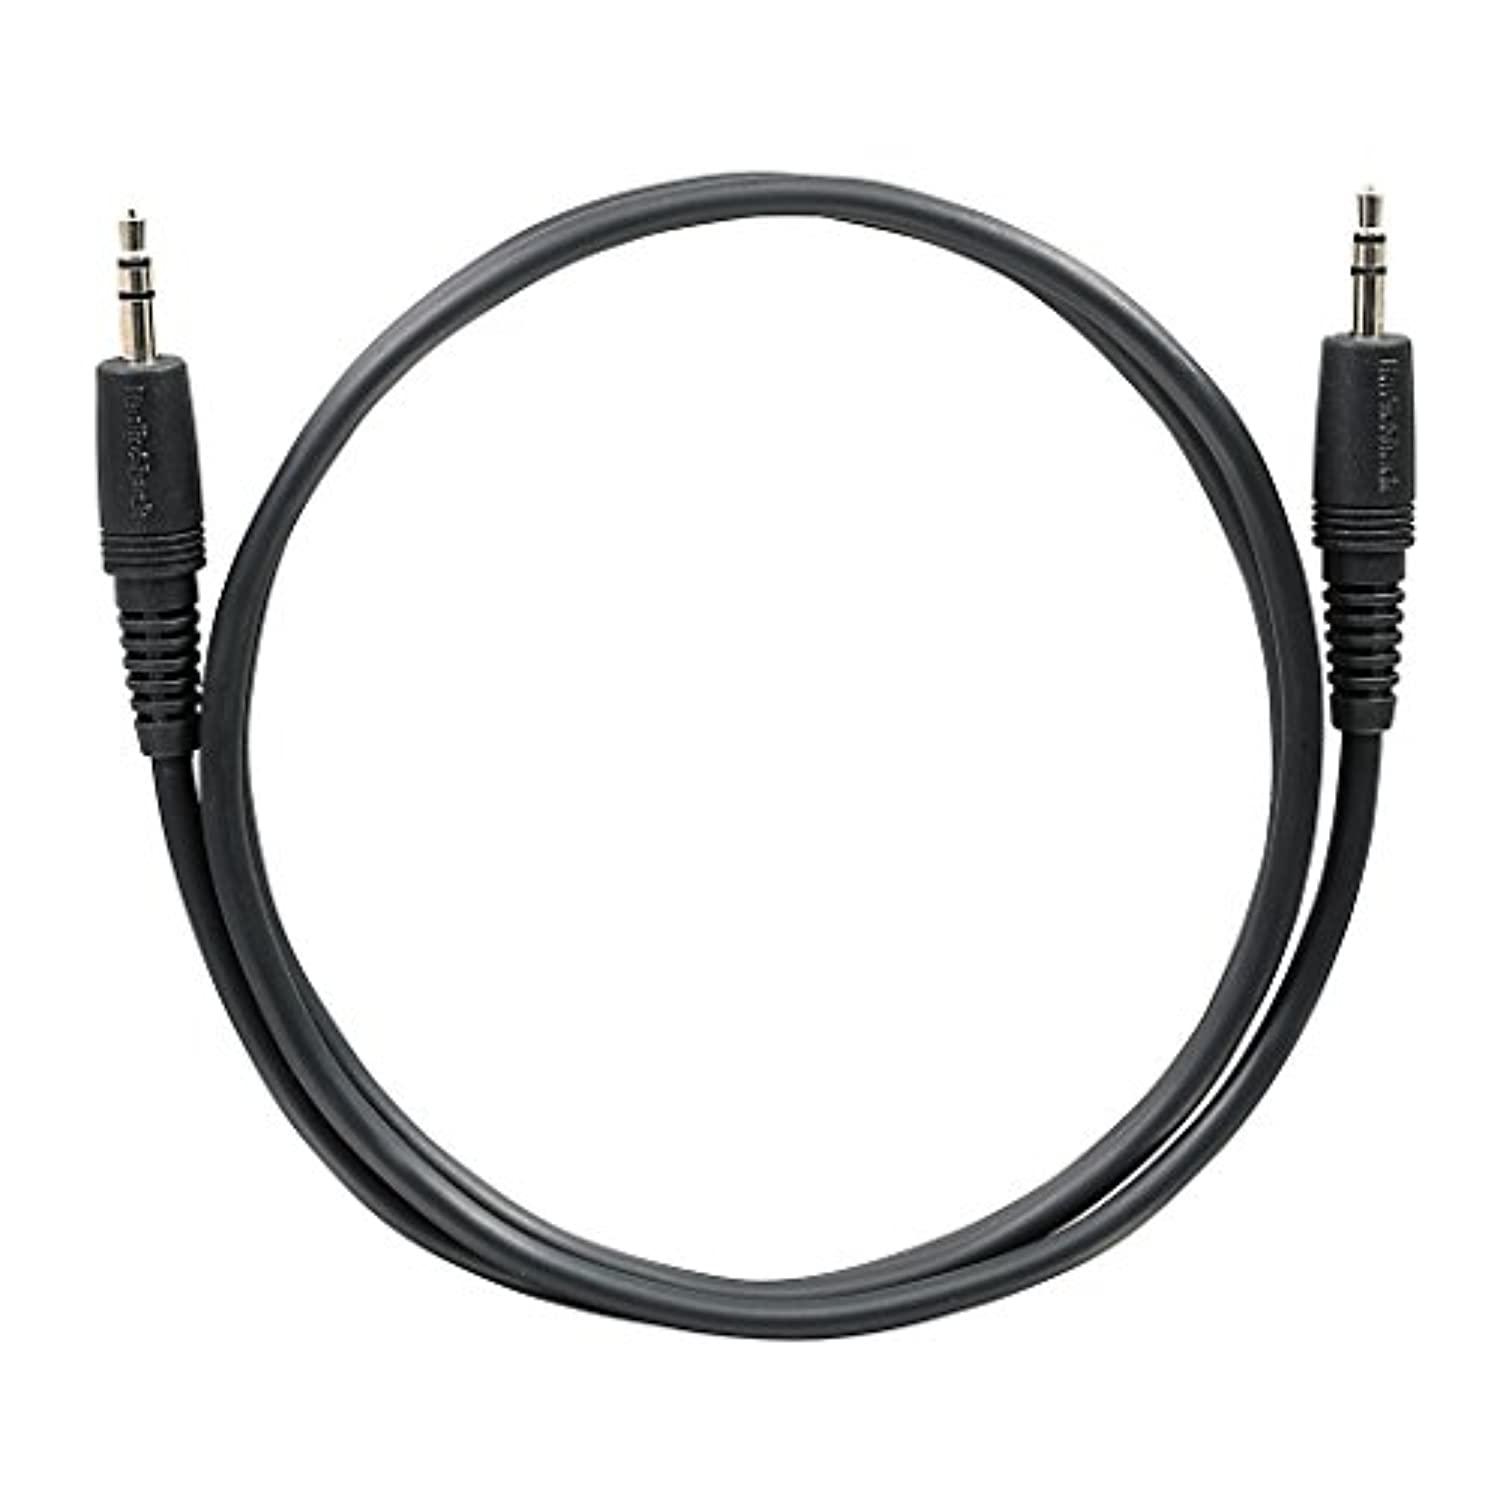 radioshack 3-foot 1/8" stereo plug cable